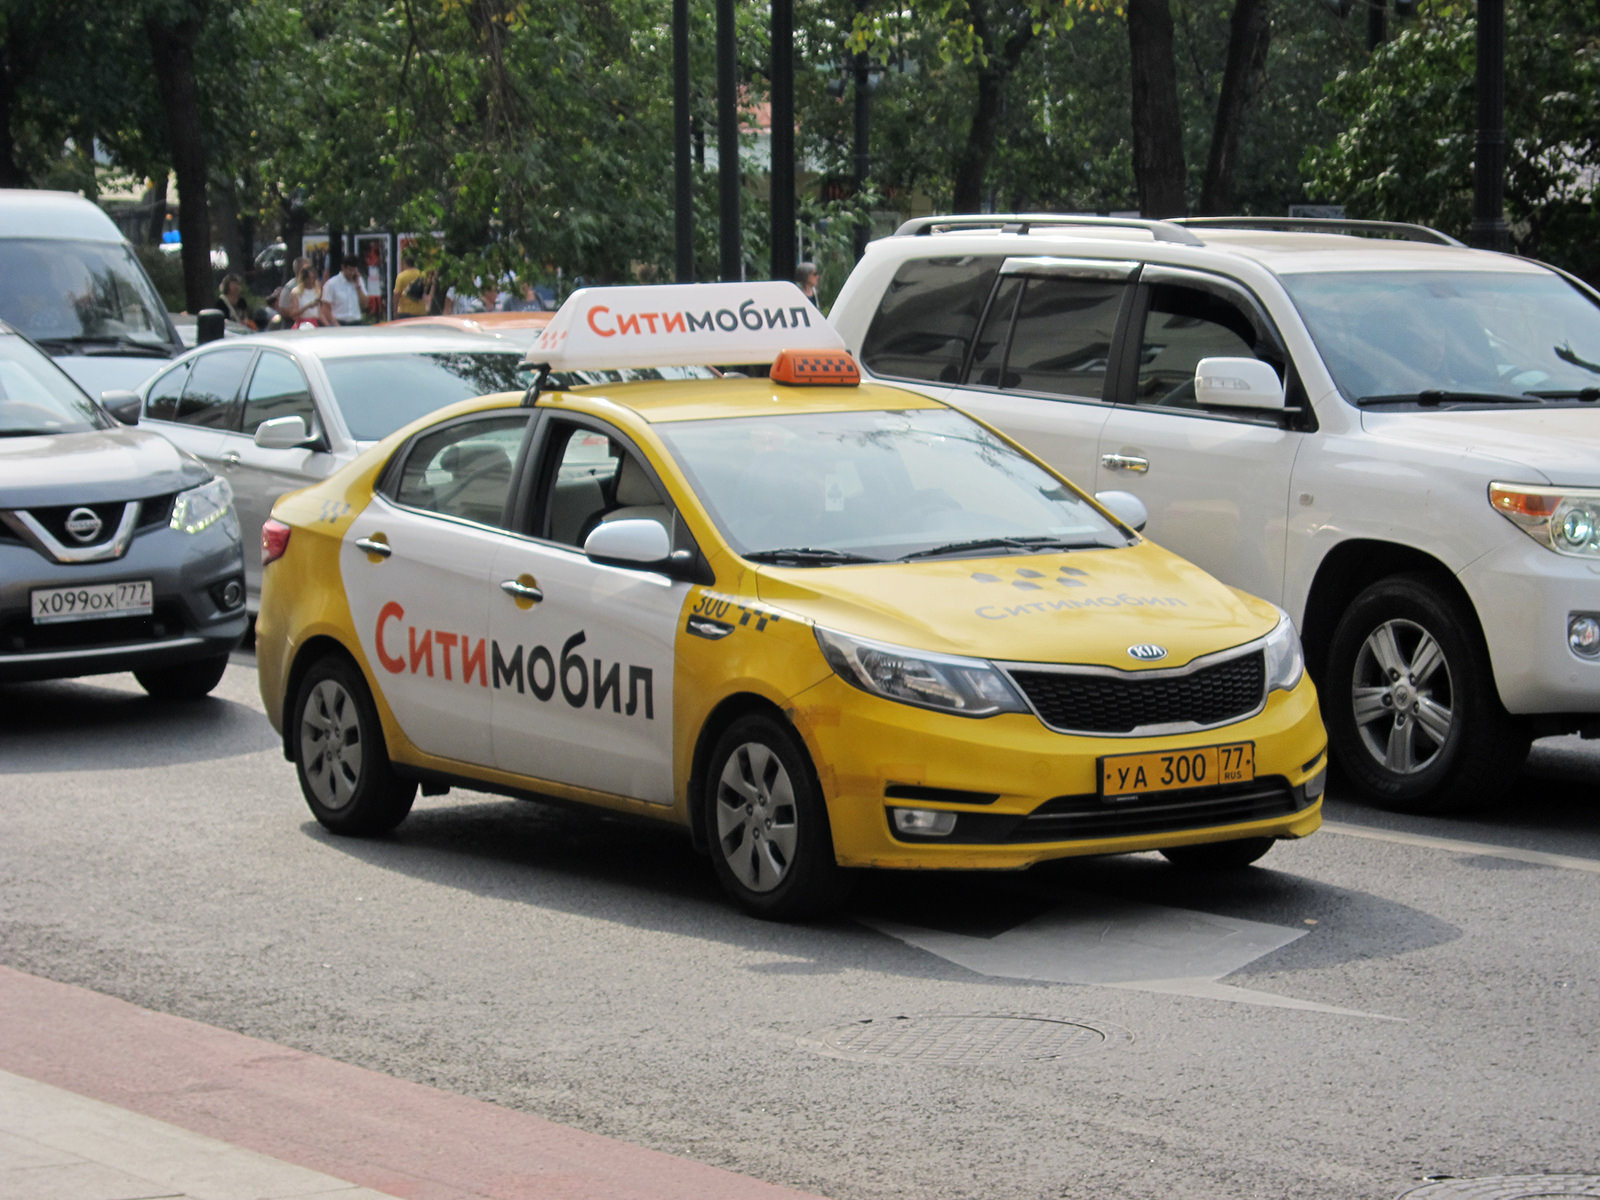 Автомобили подходящие под такси. Сити мобил. Сити мобил машины. Машина такси Сити мобил. Такси Ситимобил в Москве.